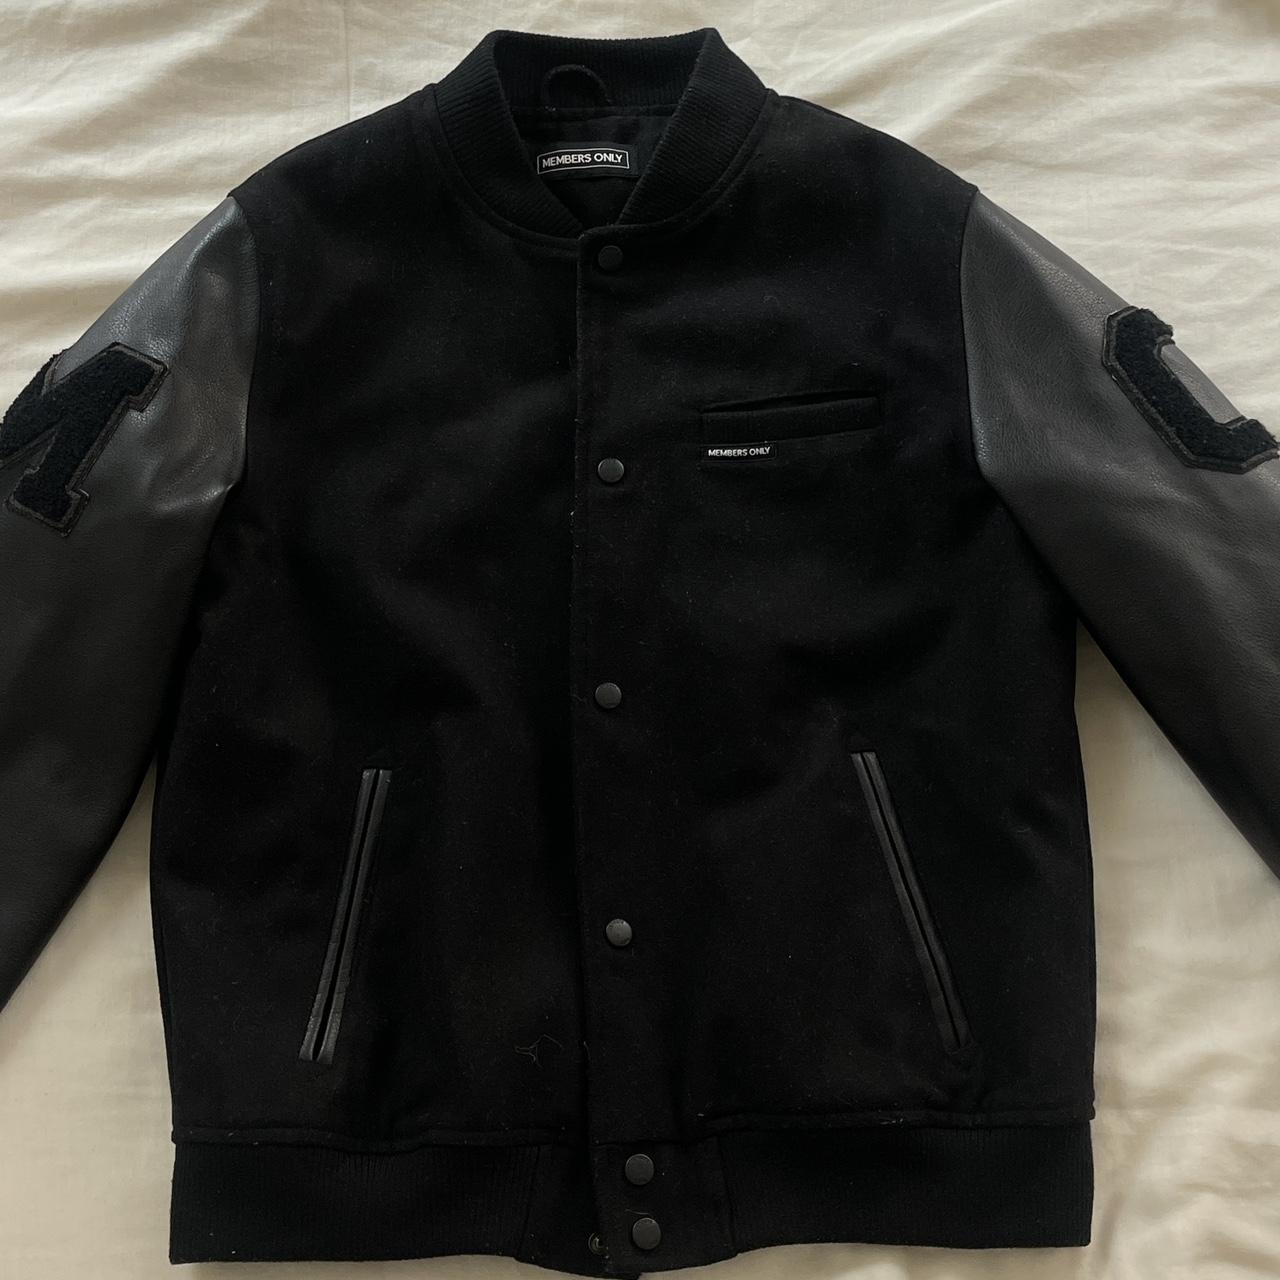 Members Only Varsity Leather Jacket - Depop